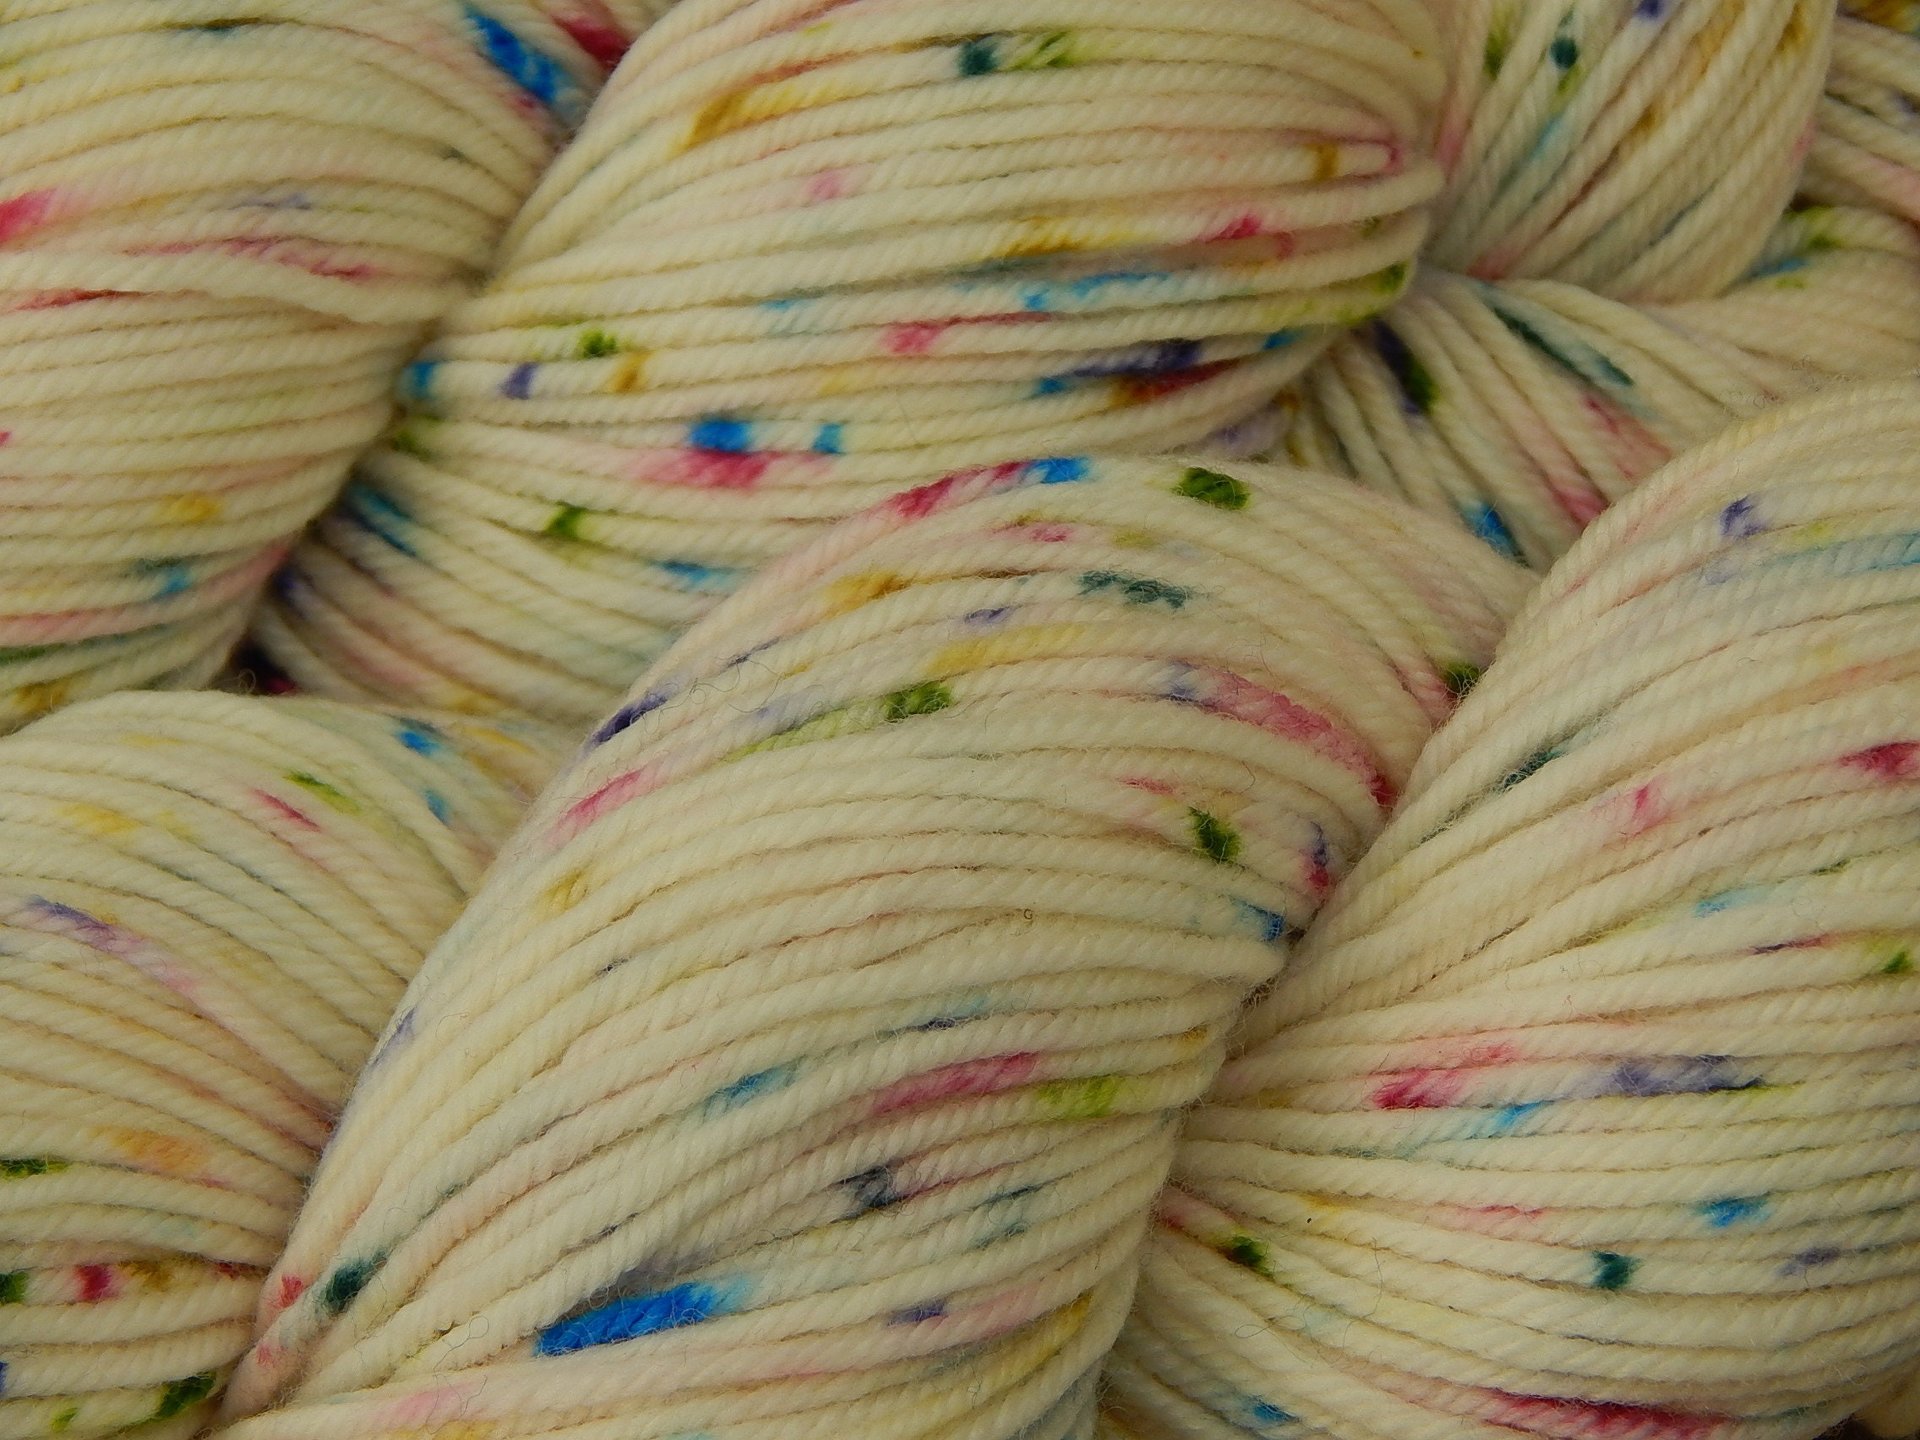 Hand Dyed Yarn, DK Weight Superwash Merino Wool - Potluck Confetti - Cream Off White Rainbow Speckled Indie Dyed Knitting Yarn